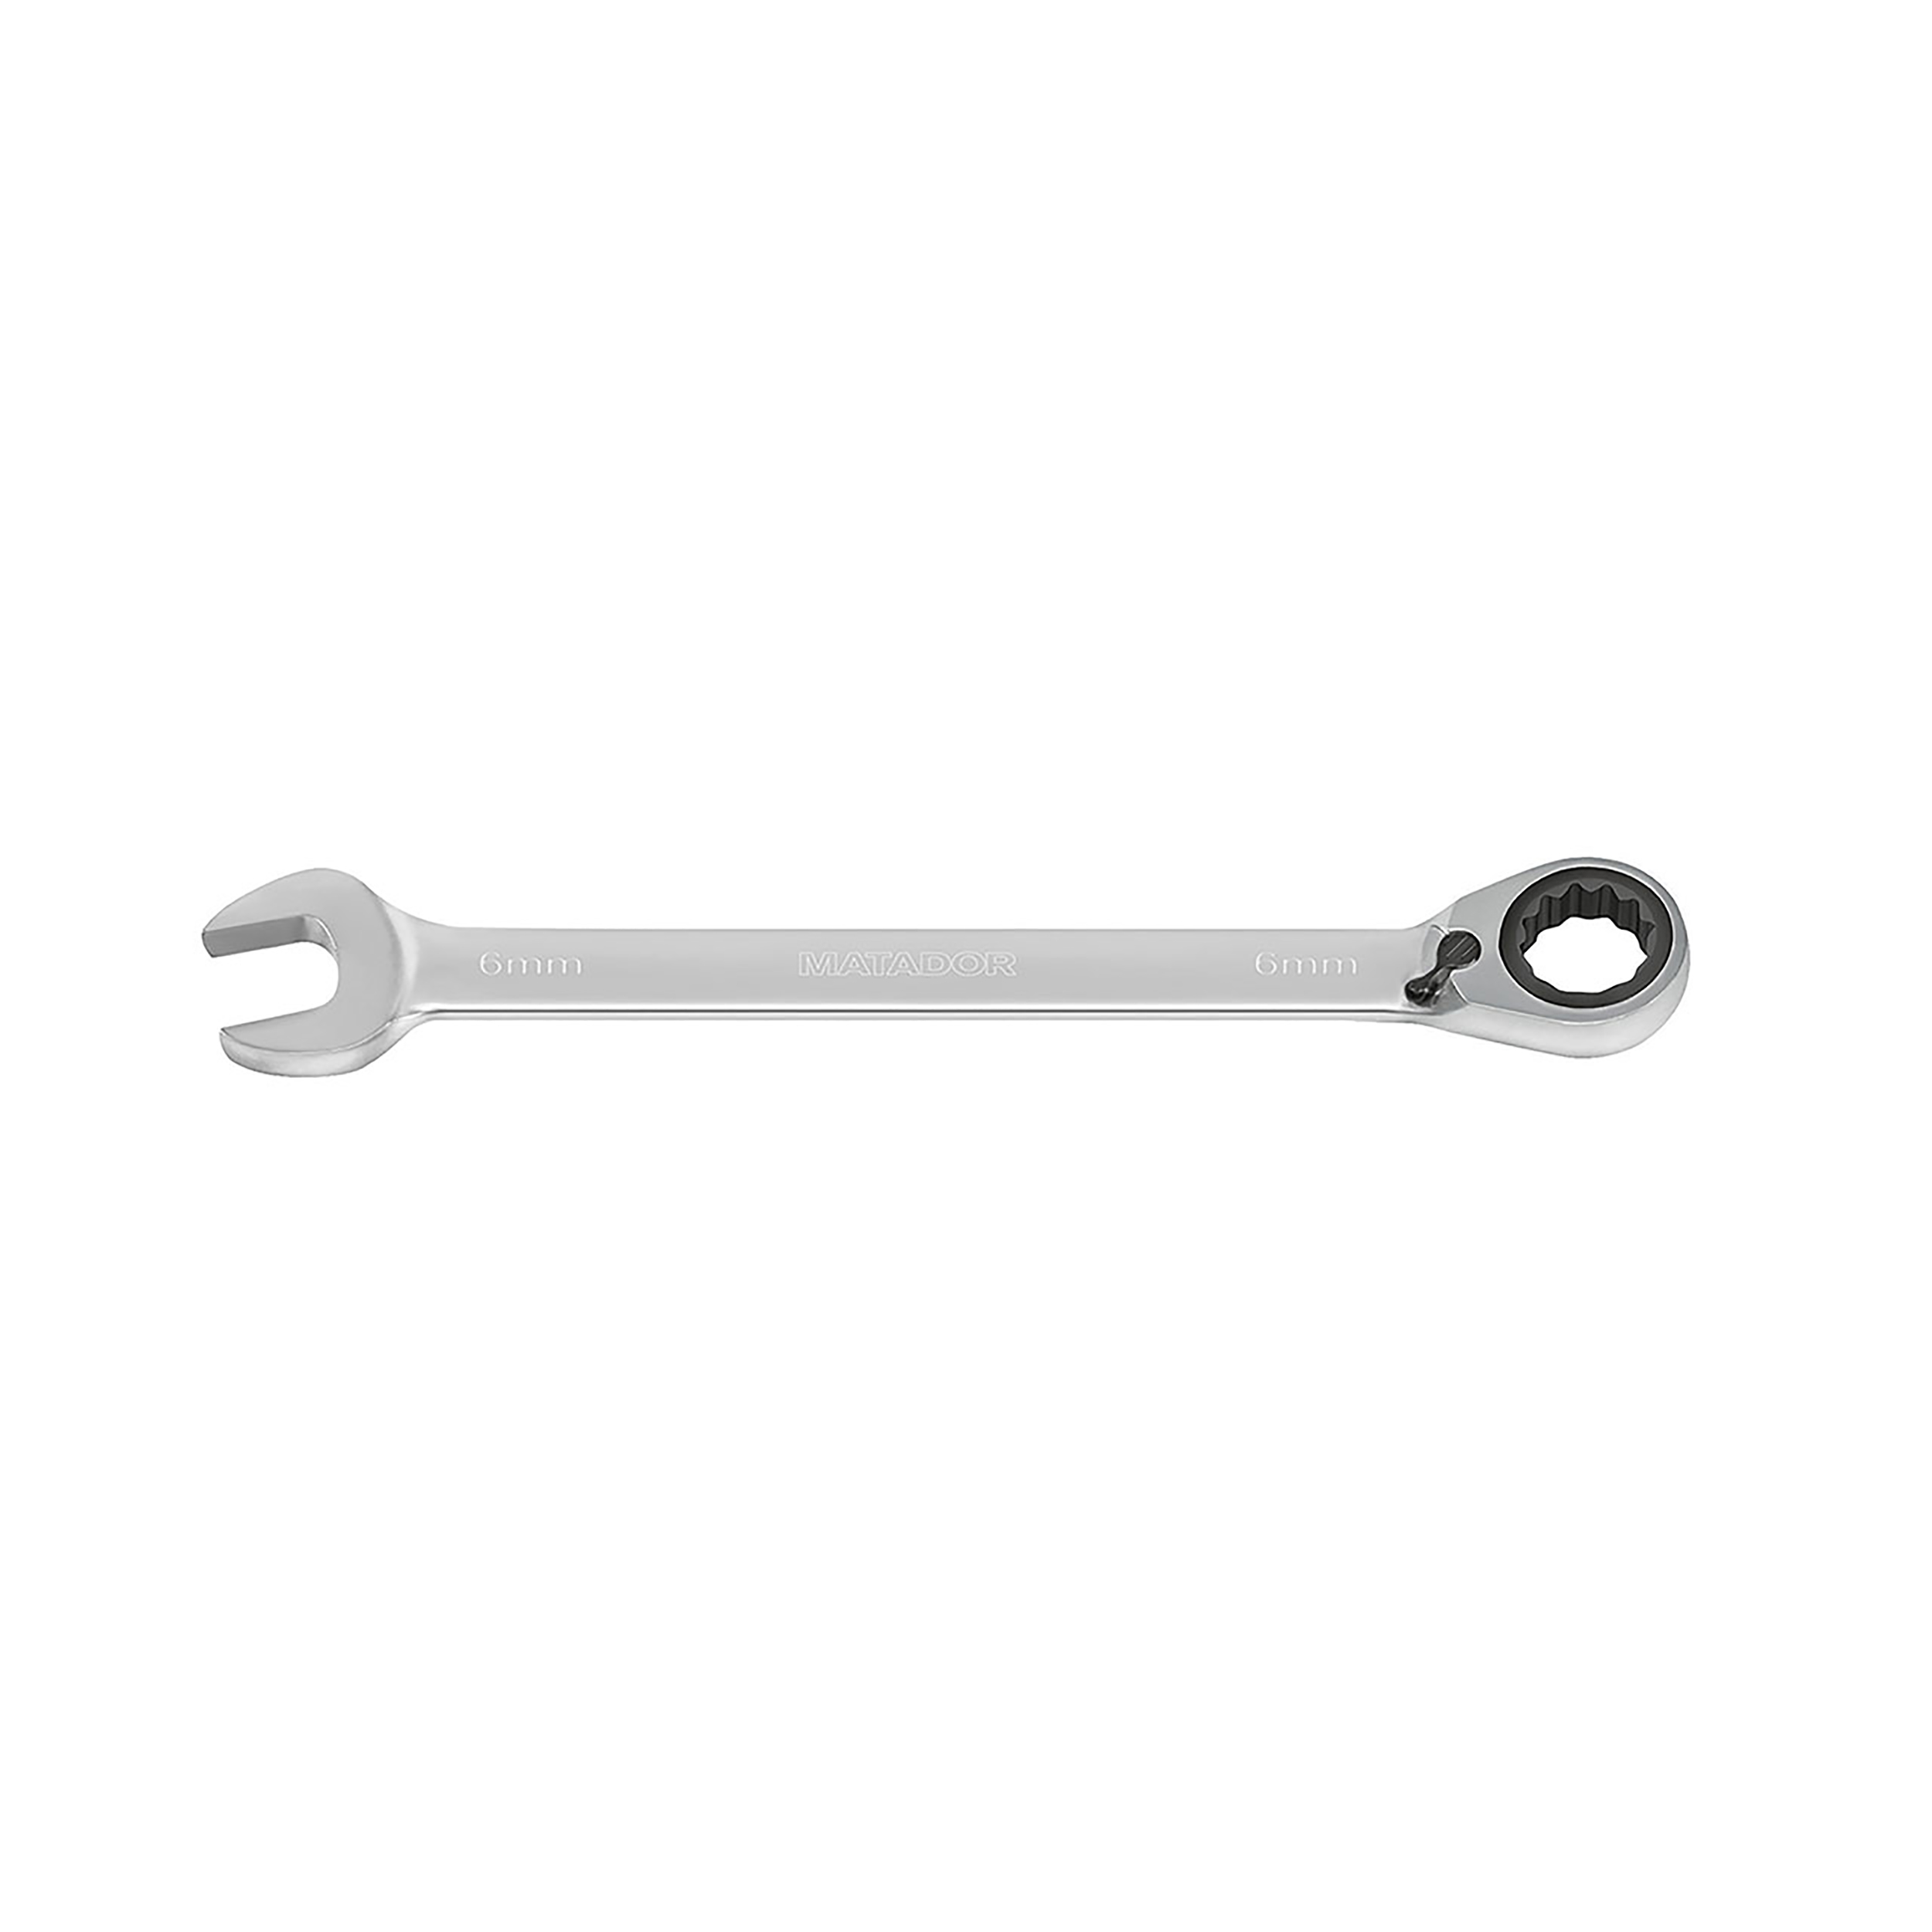 Knarren-Ringmaulschlüssel mit Hebel, 12 mm, 109 Nm, MATADOR Art.-Nr.: 01890120